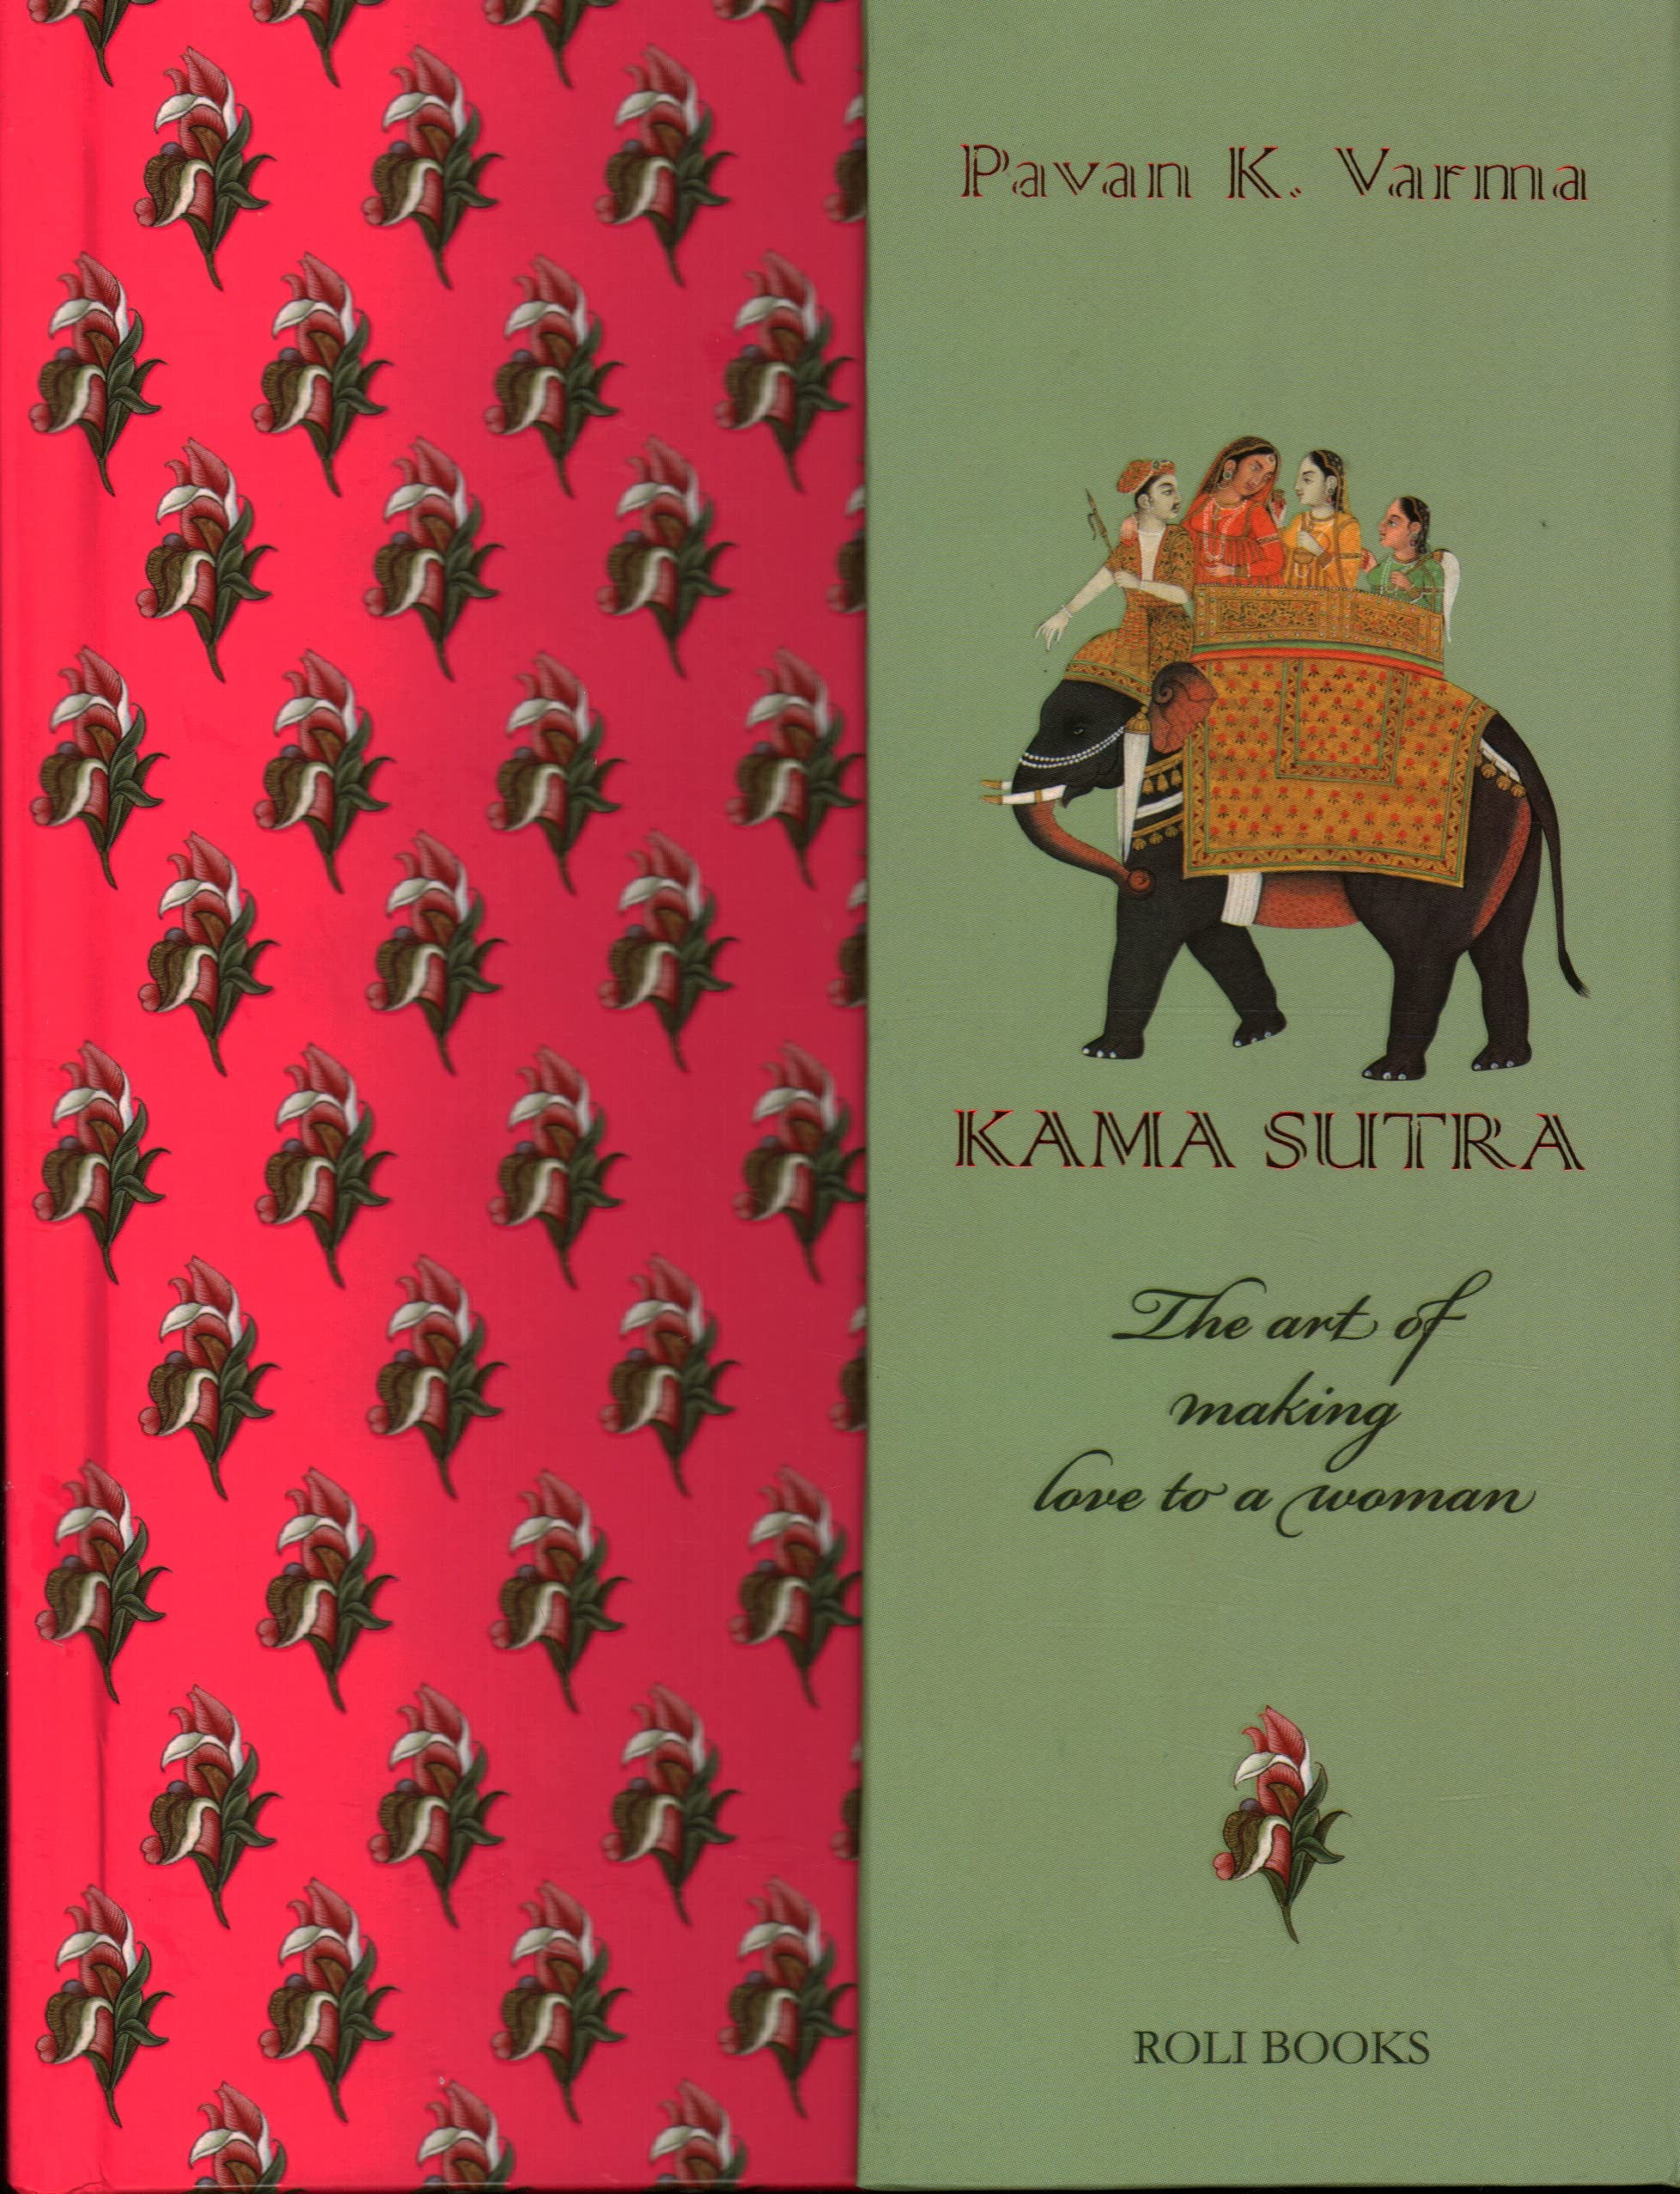 Kama Sutra | Pavan K. Varma image23